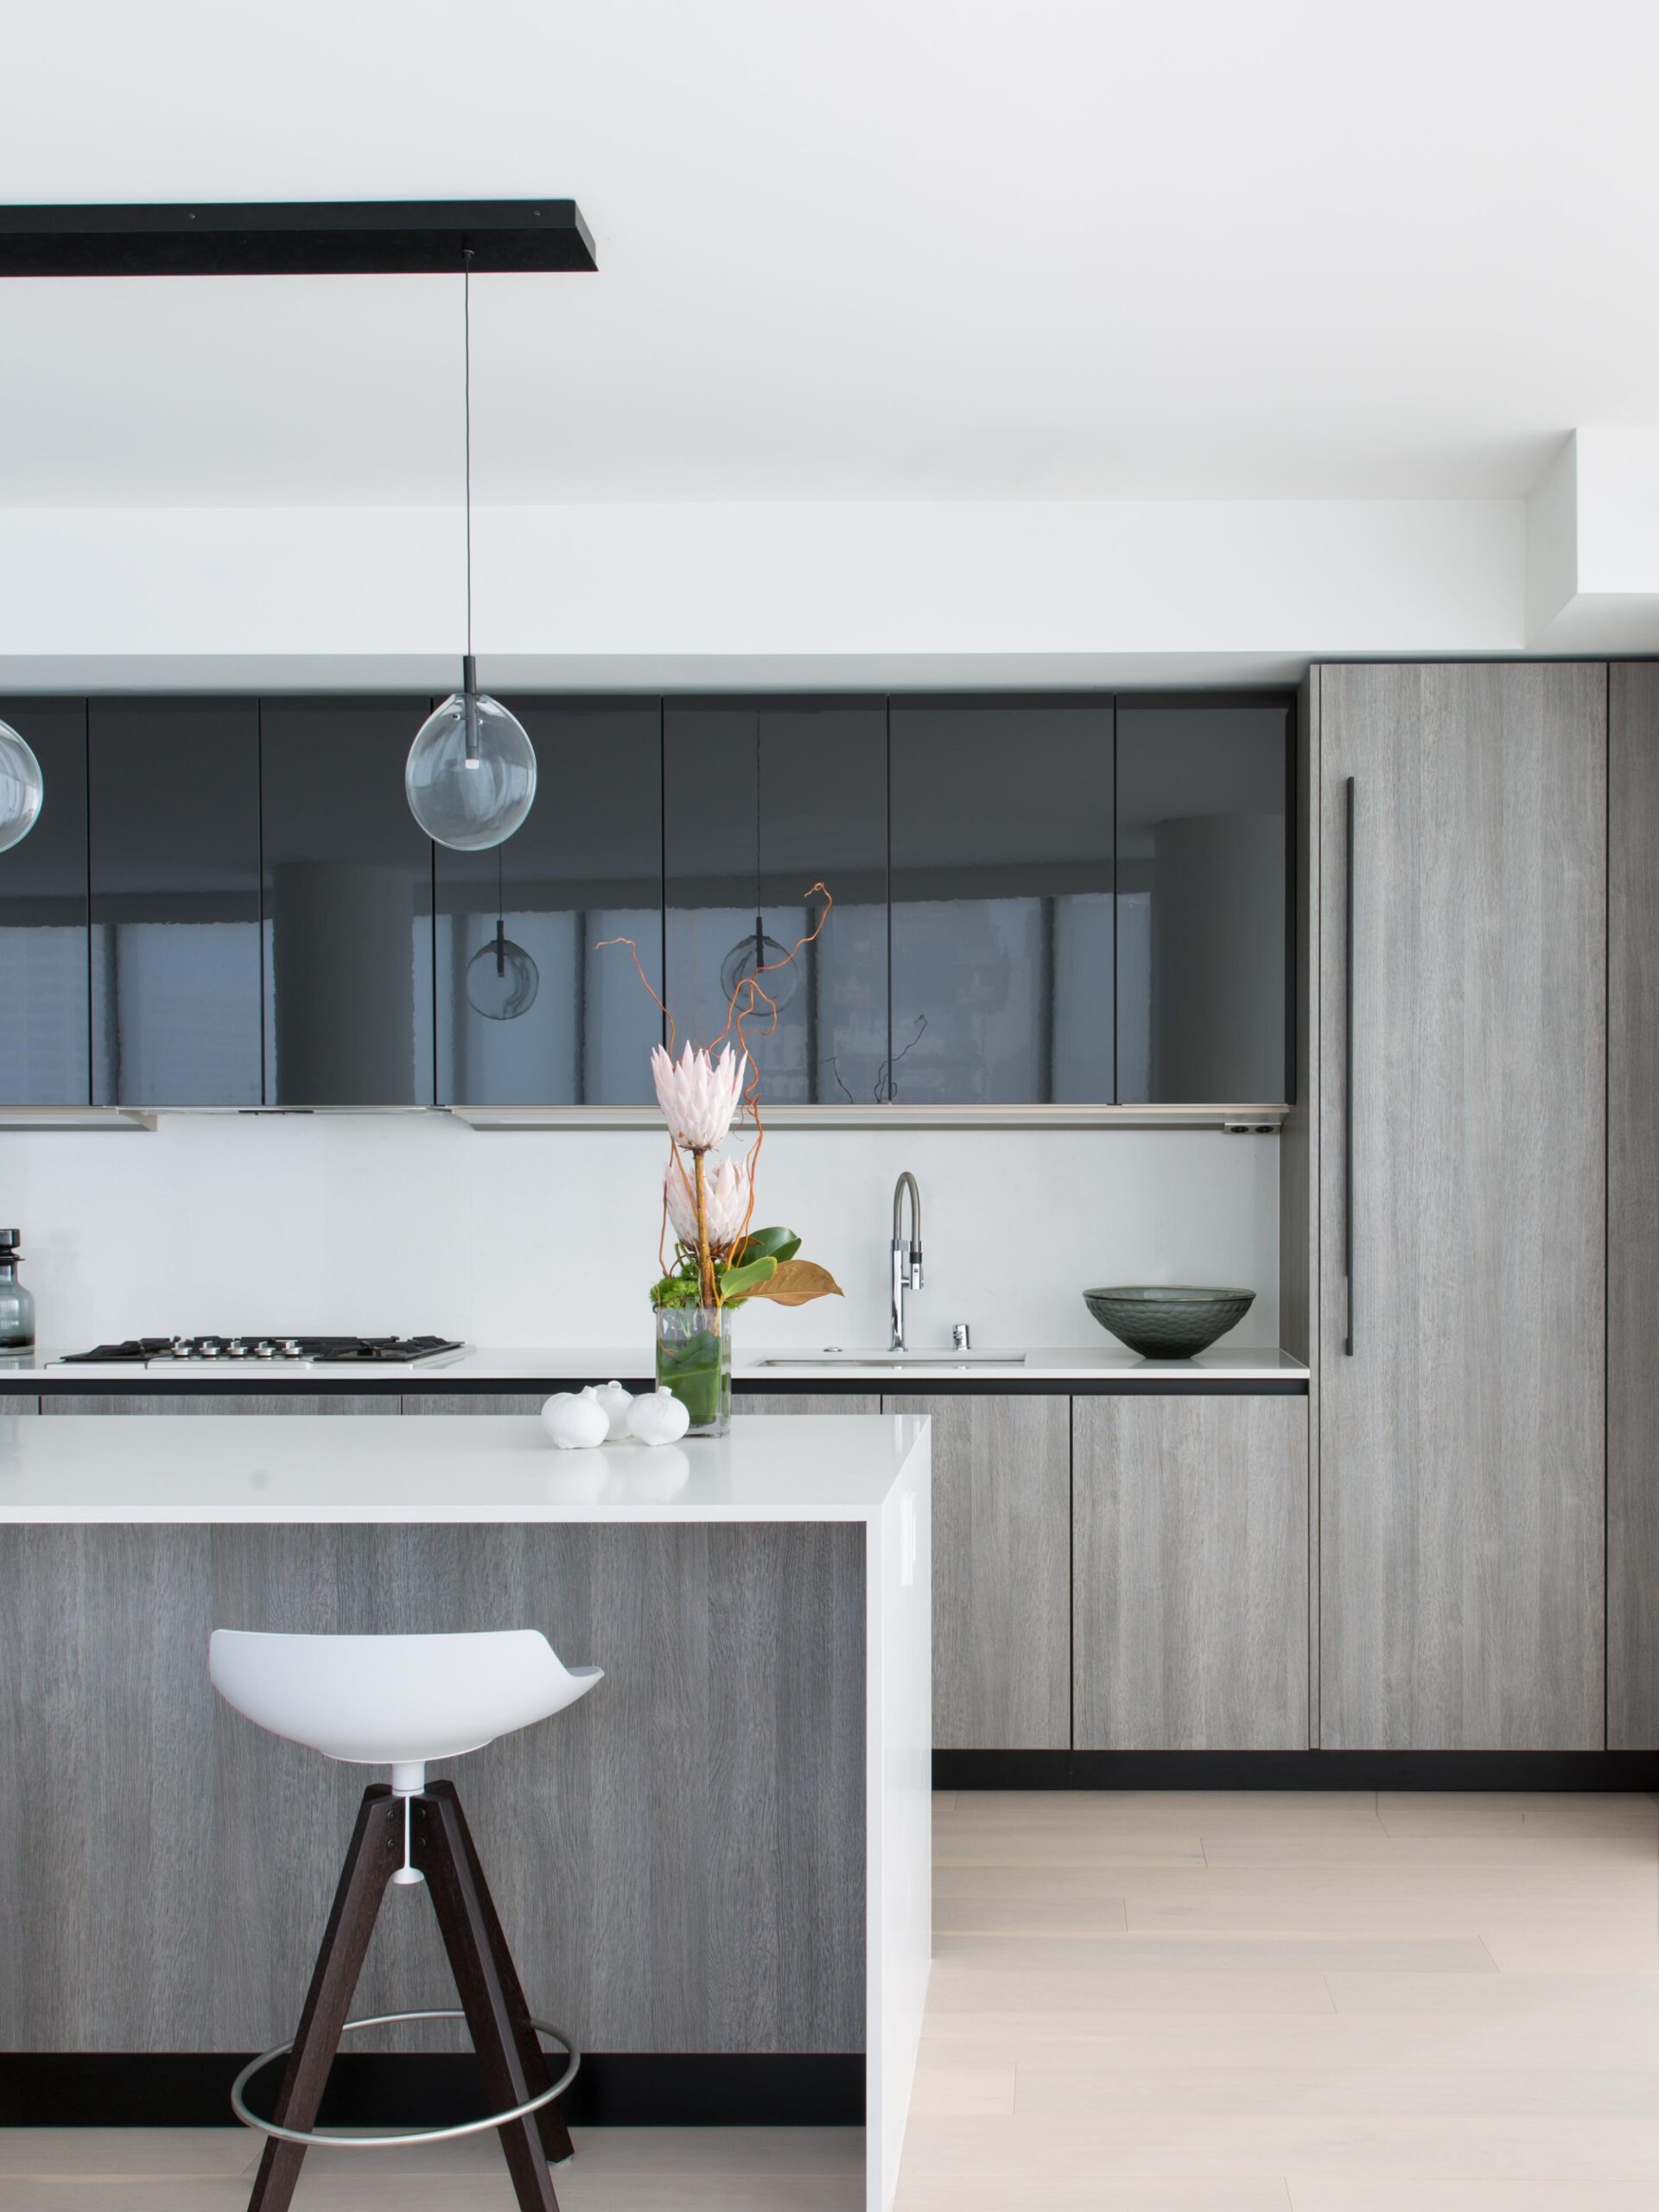 5 Sophisticated Gray Kitchen Ideas - Chic Gray Kitchens - modern grey kitchen cabinets